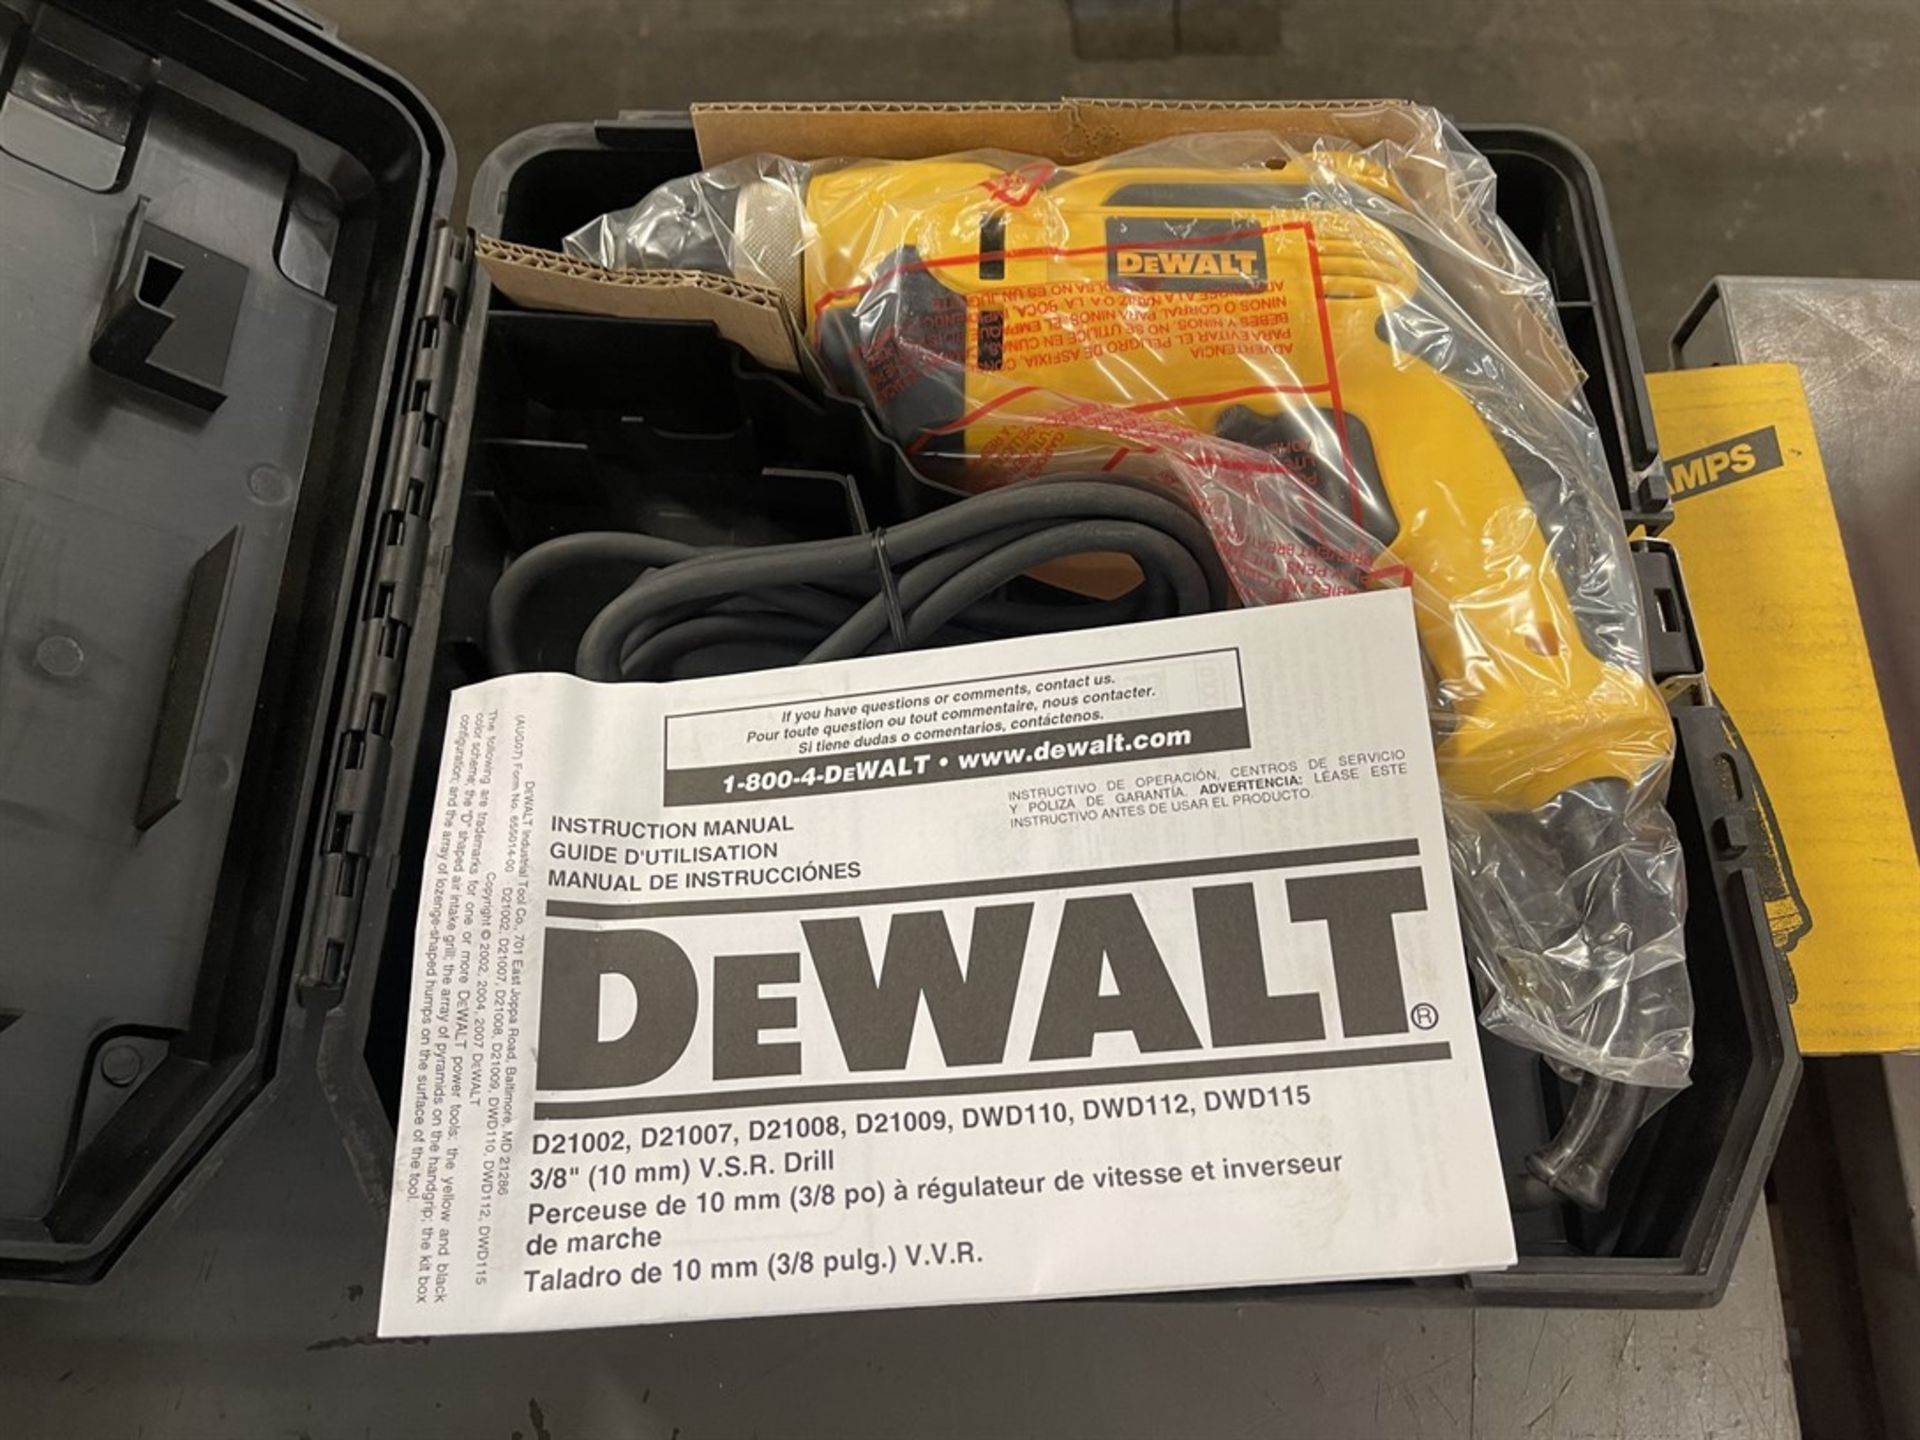 DEWALT DWD110 3/8" VSR Drill - Image 2 of 2